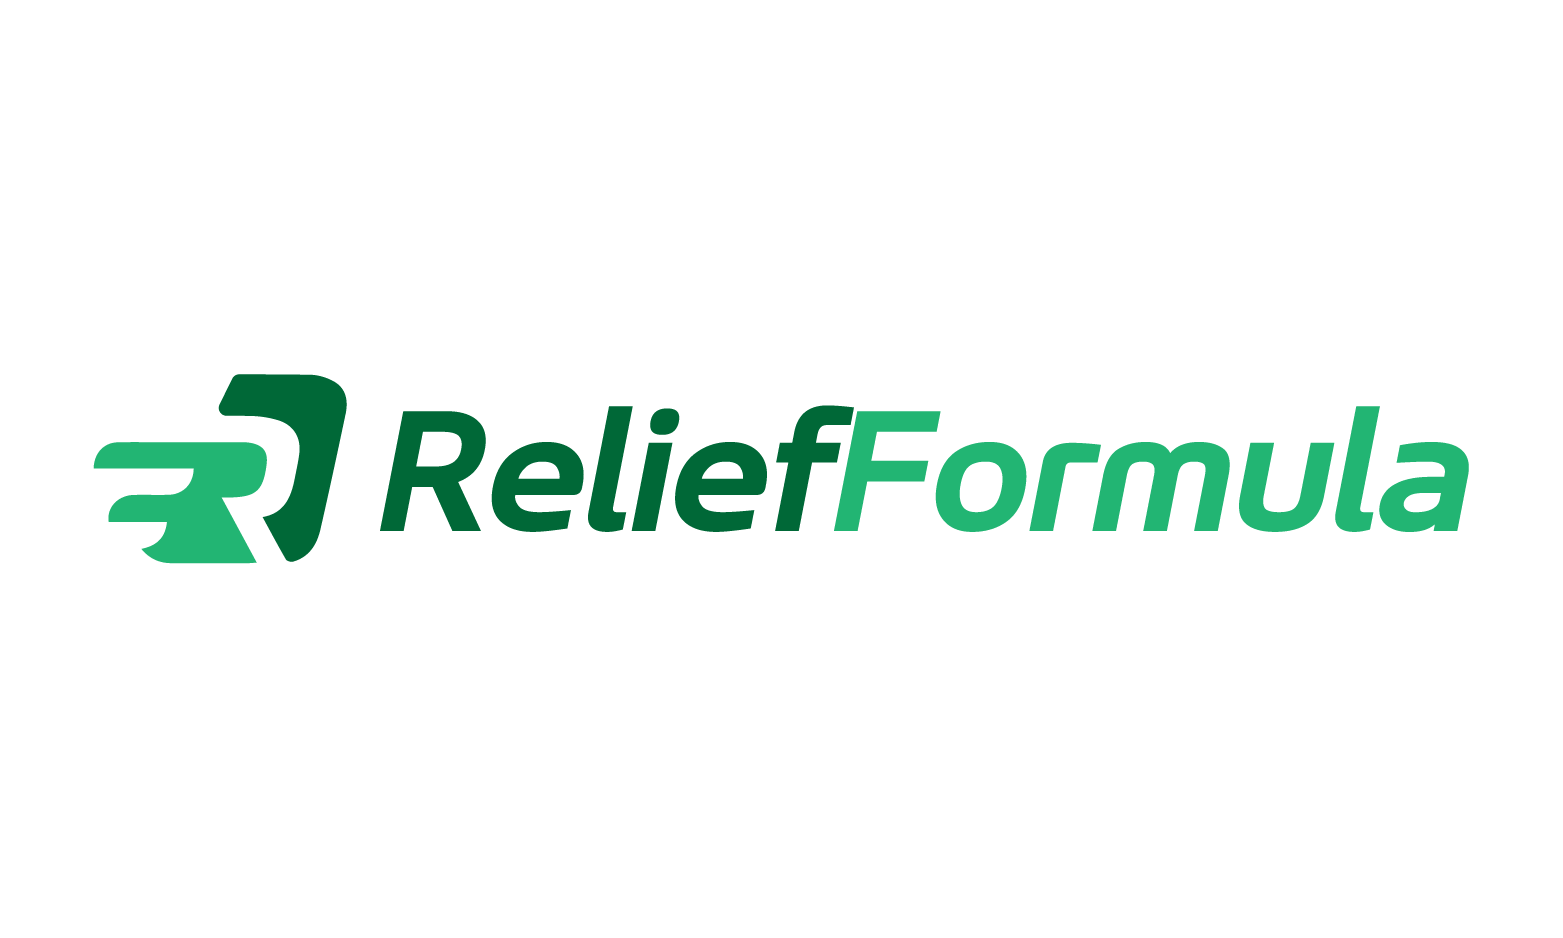 ReliefFormula.com - Creative brandable domain for sale